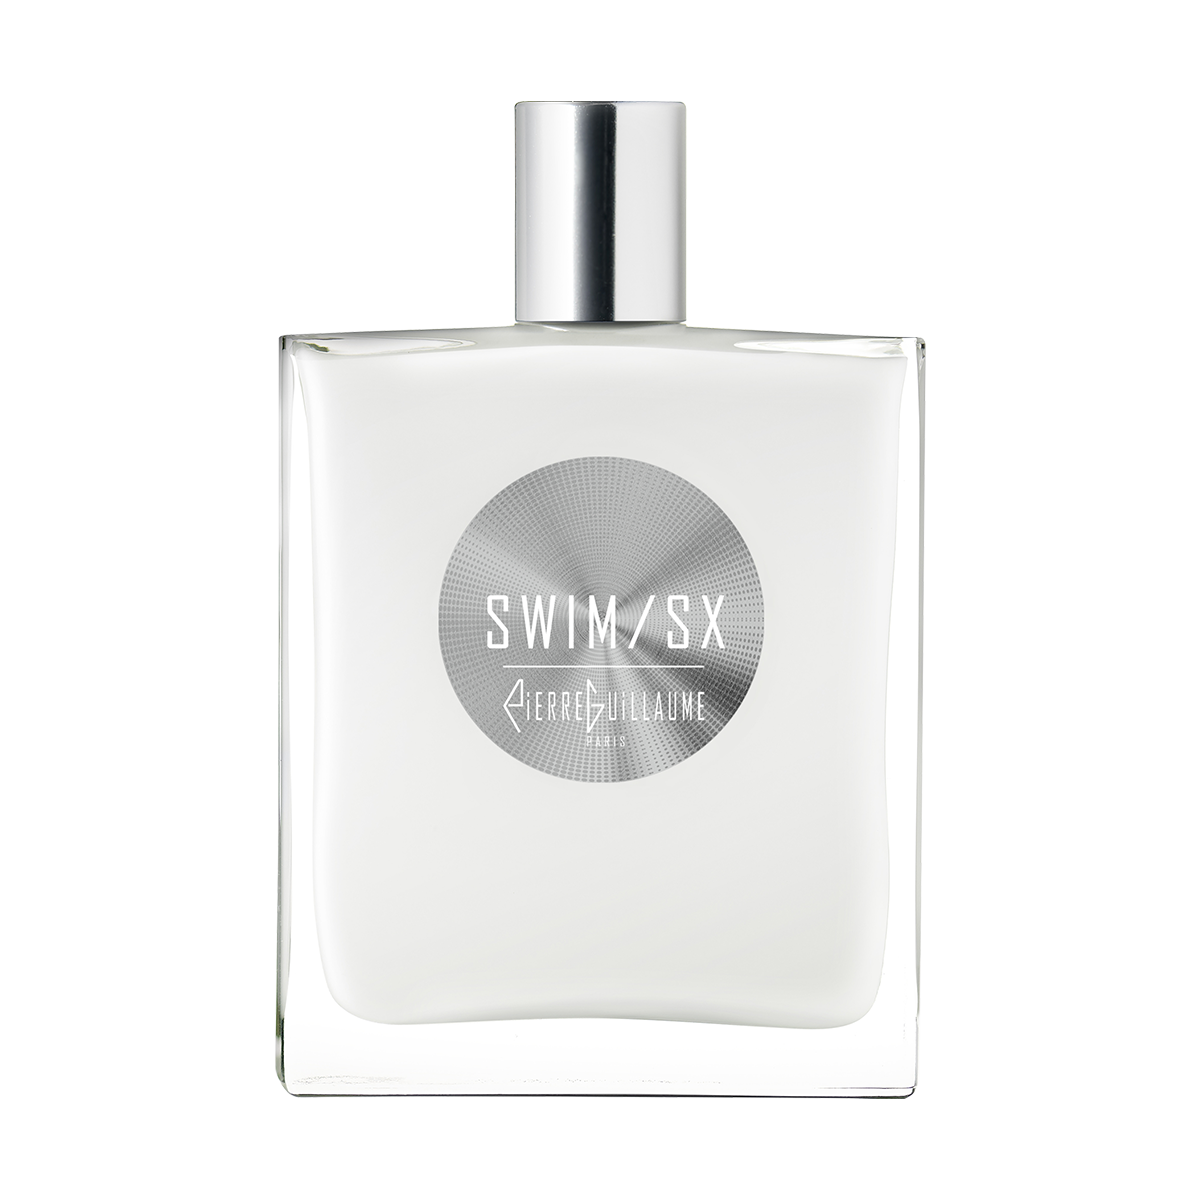 Swim-Sx-Best-Seller, 100ml-Perfume Indian Hemp, Okoume Wood and Rosewood